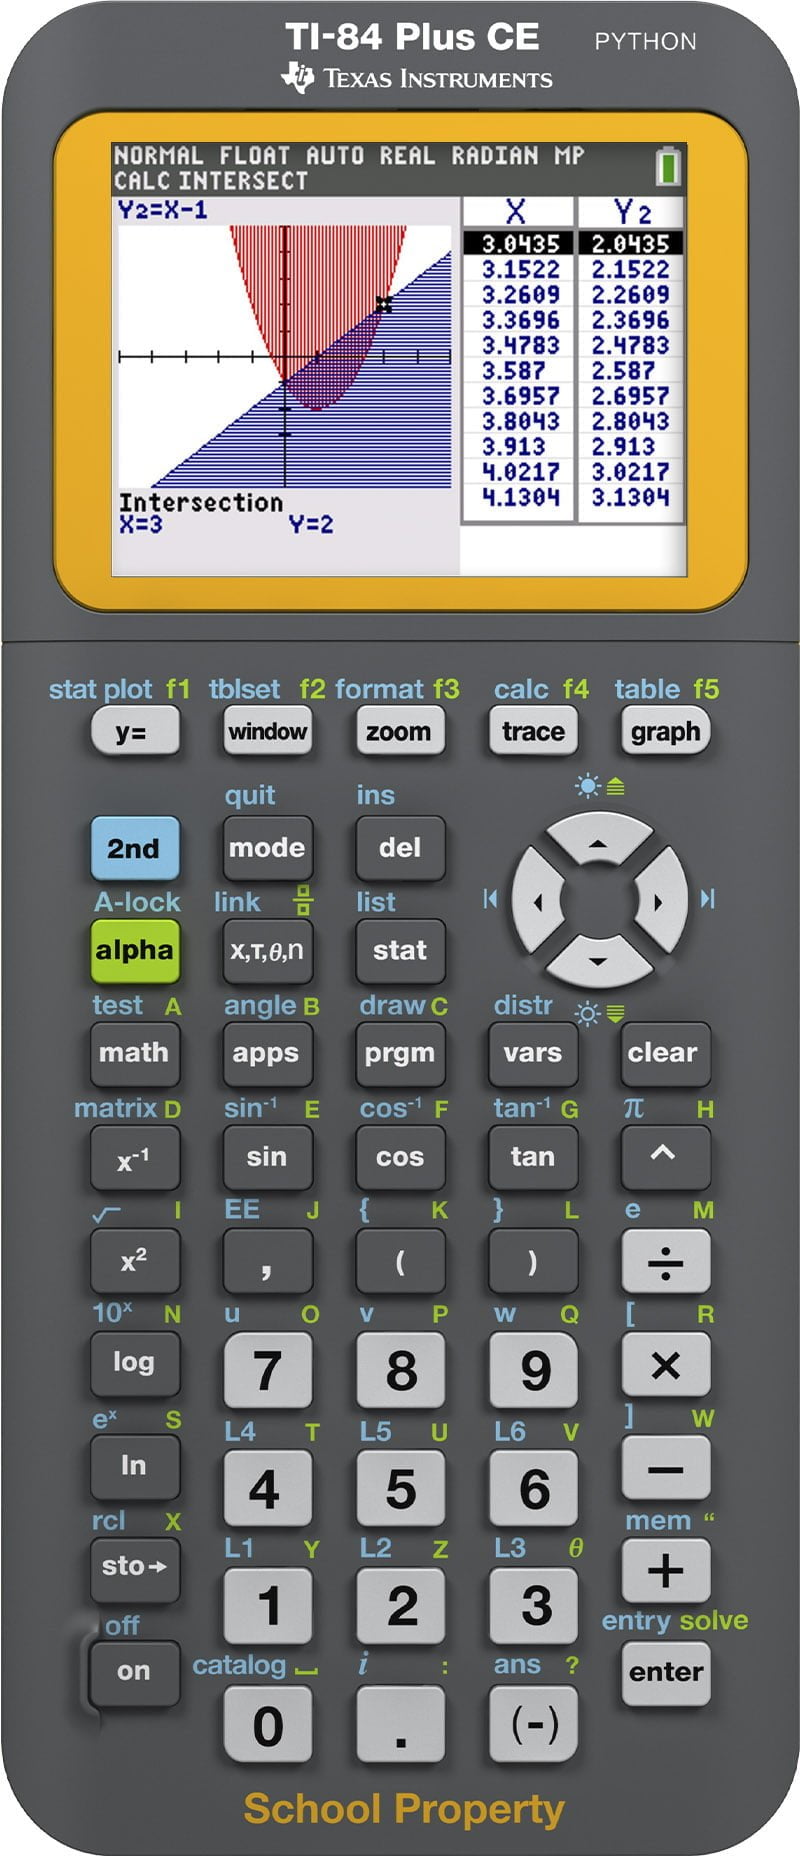 Free Online Calculator, Math Manipulatives